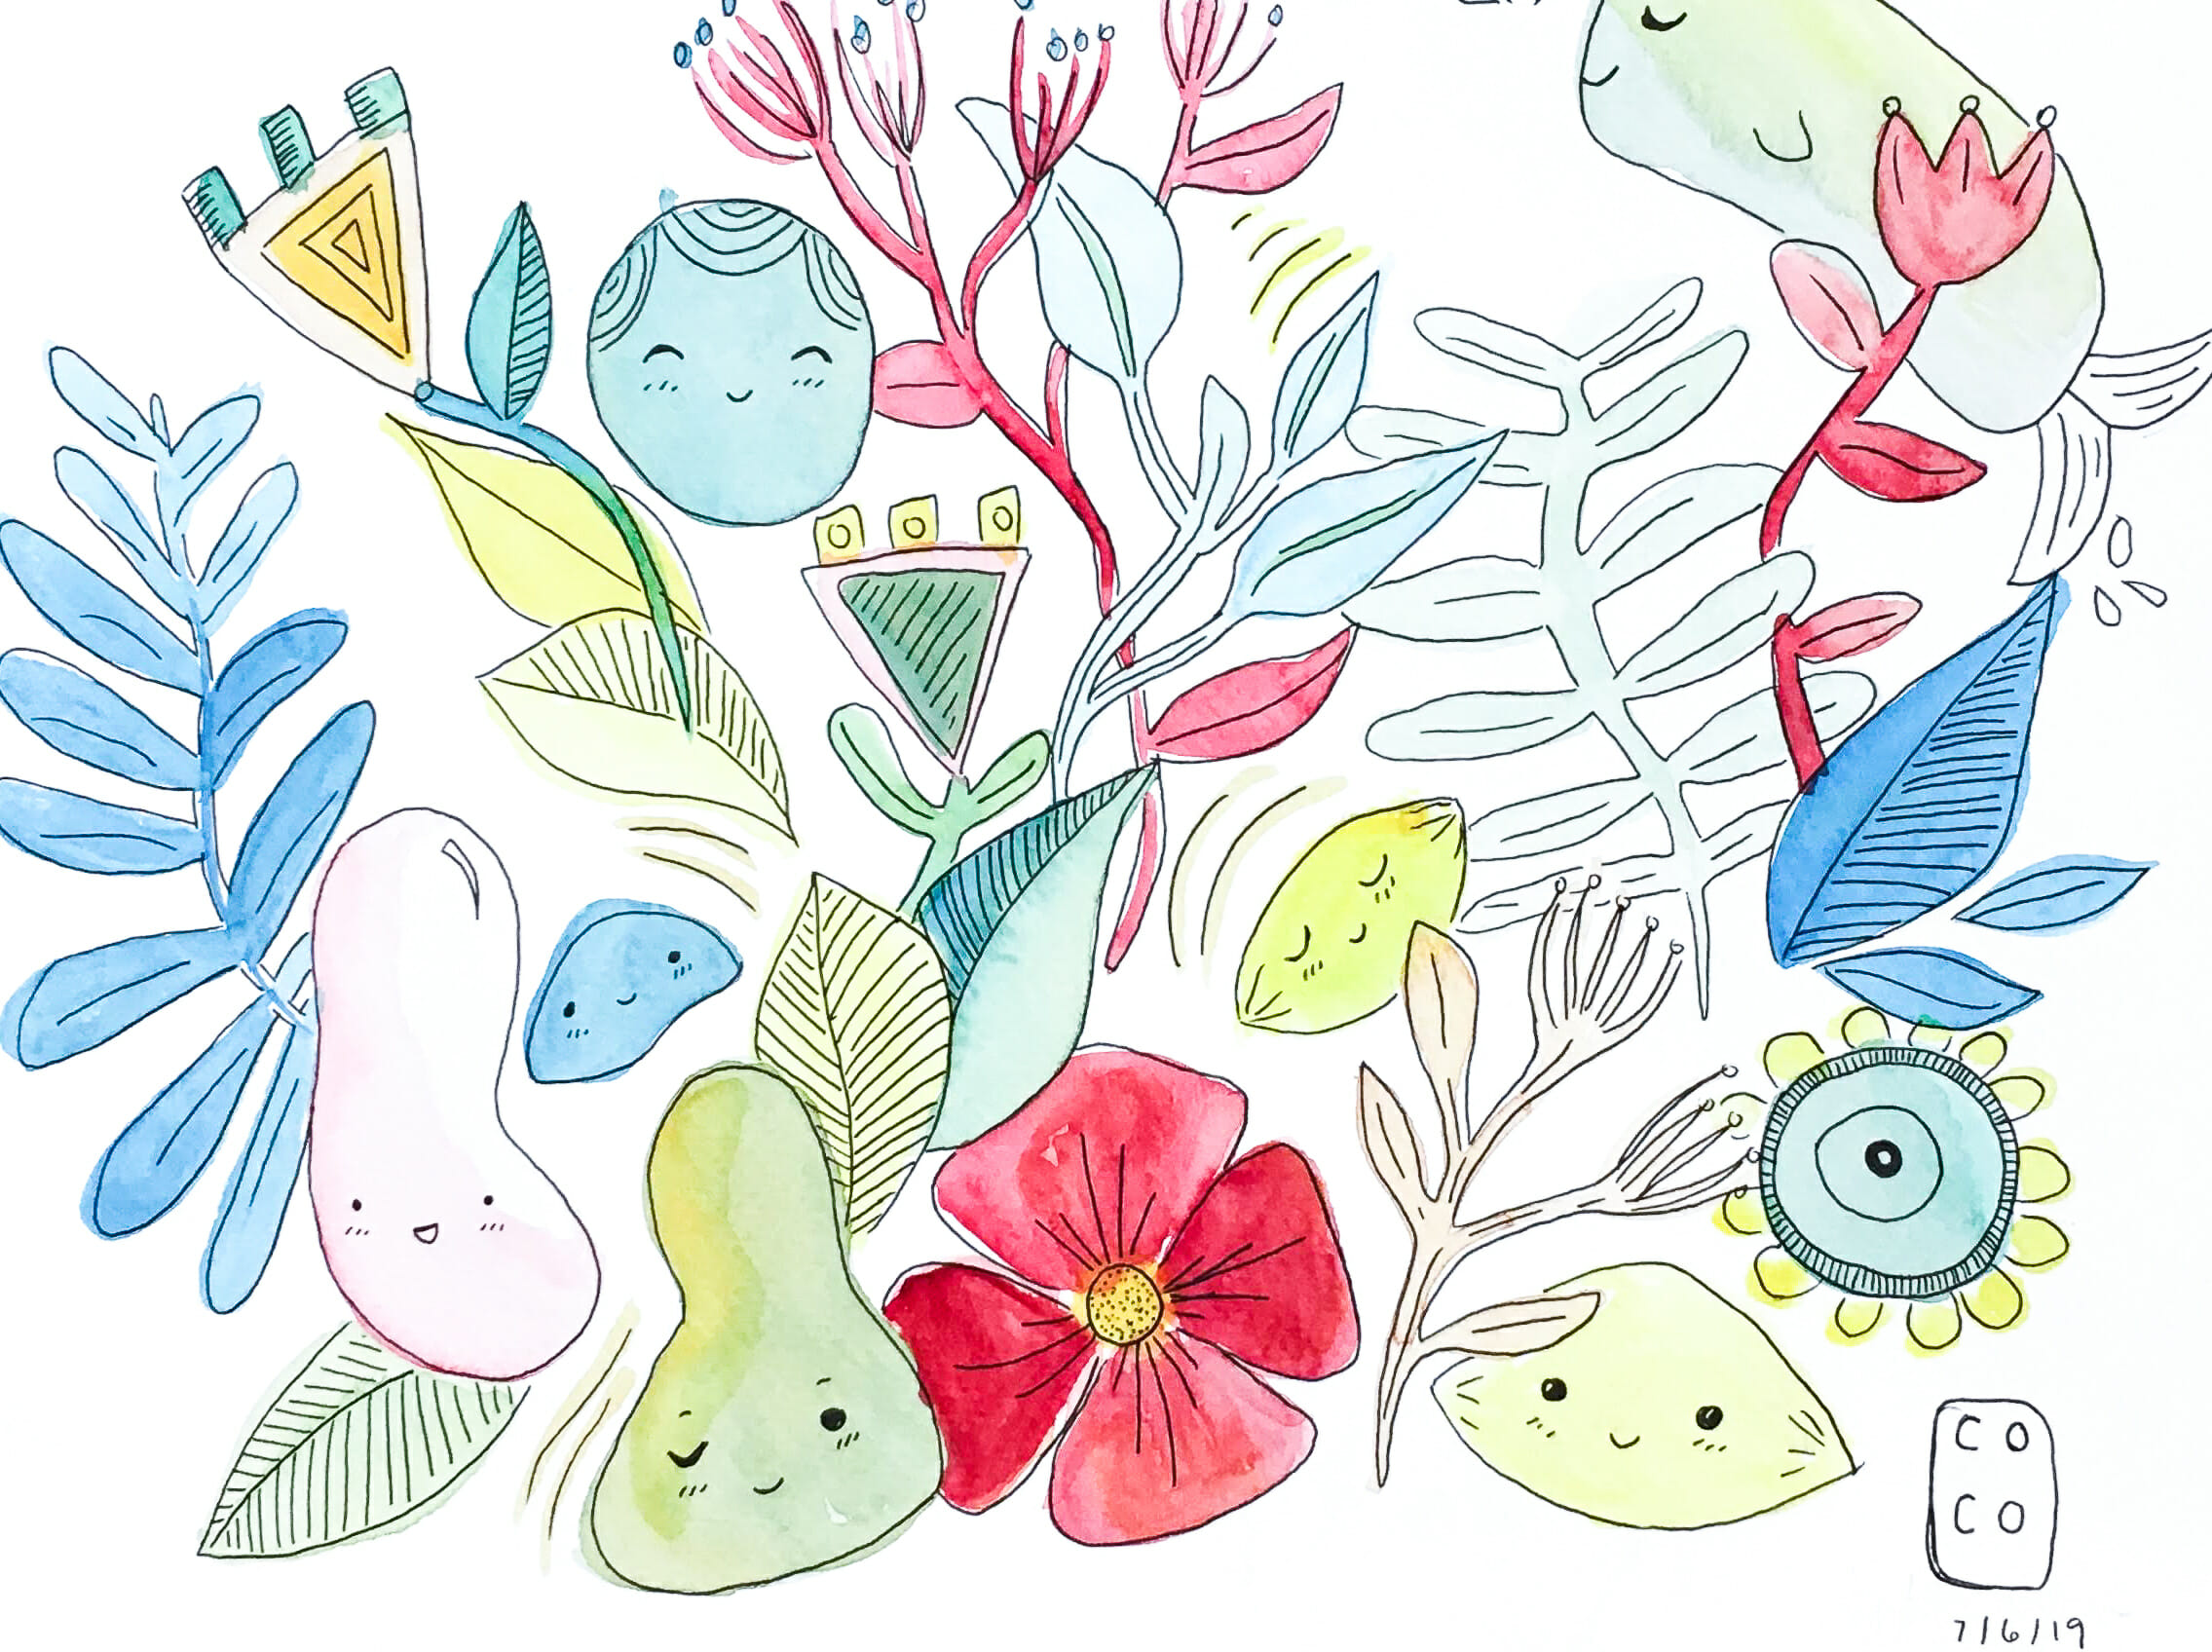 Catherine Clarke Illustration of plants